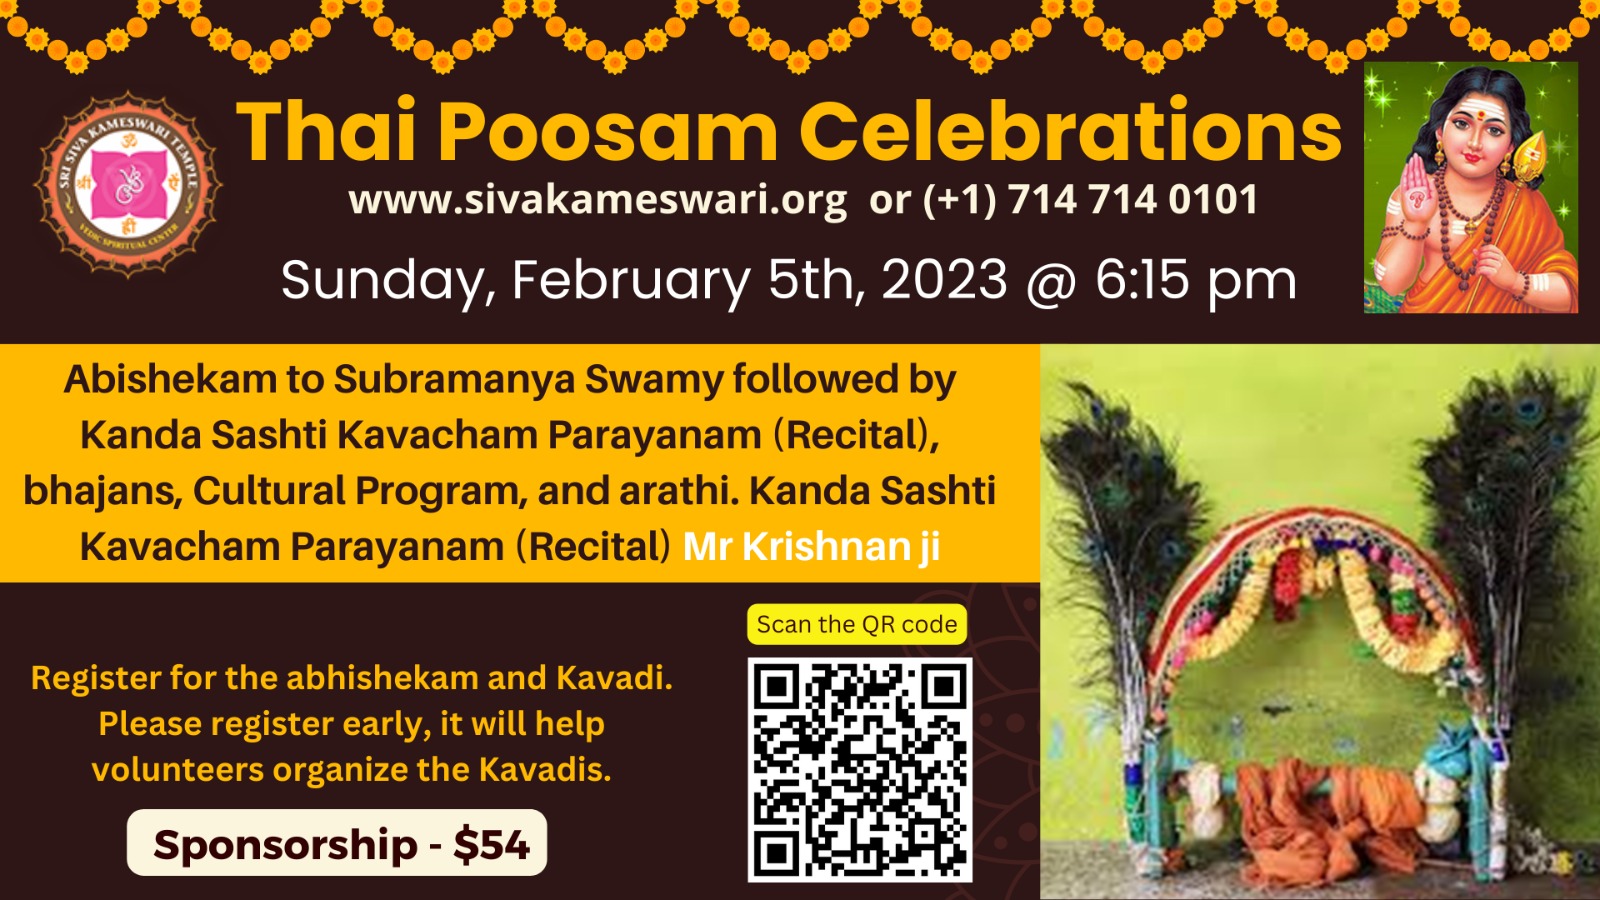 https://sivakameswari.org/thai-poosam-celebrations/